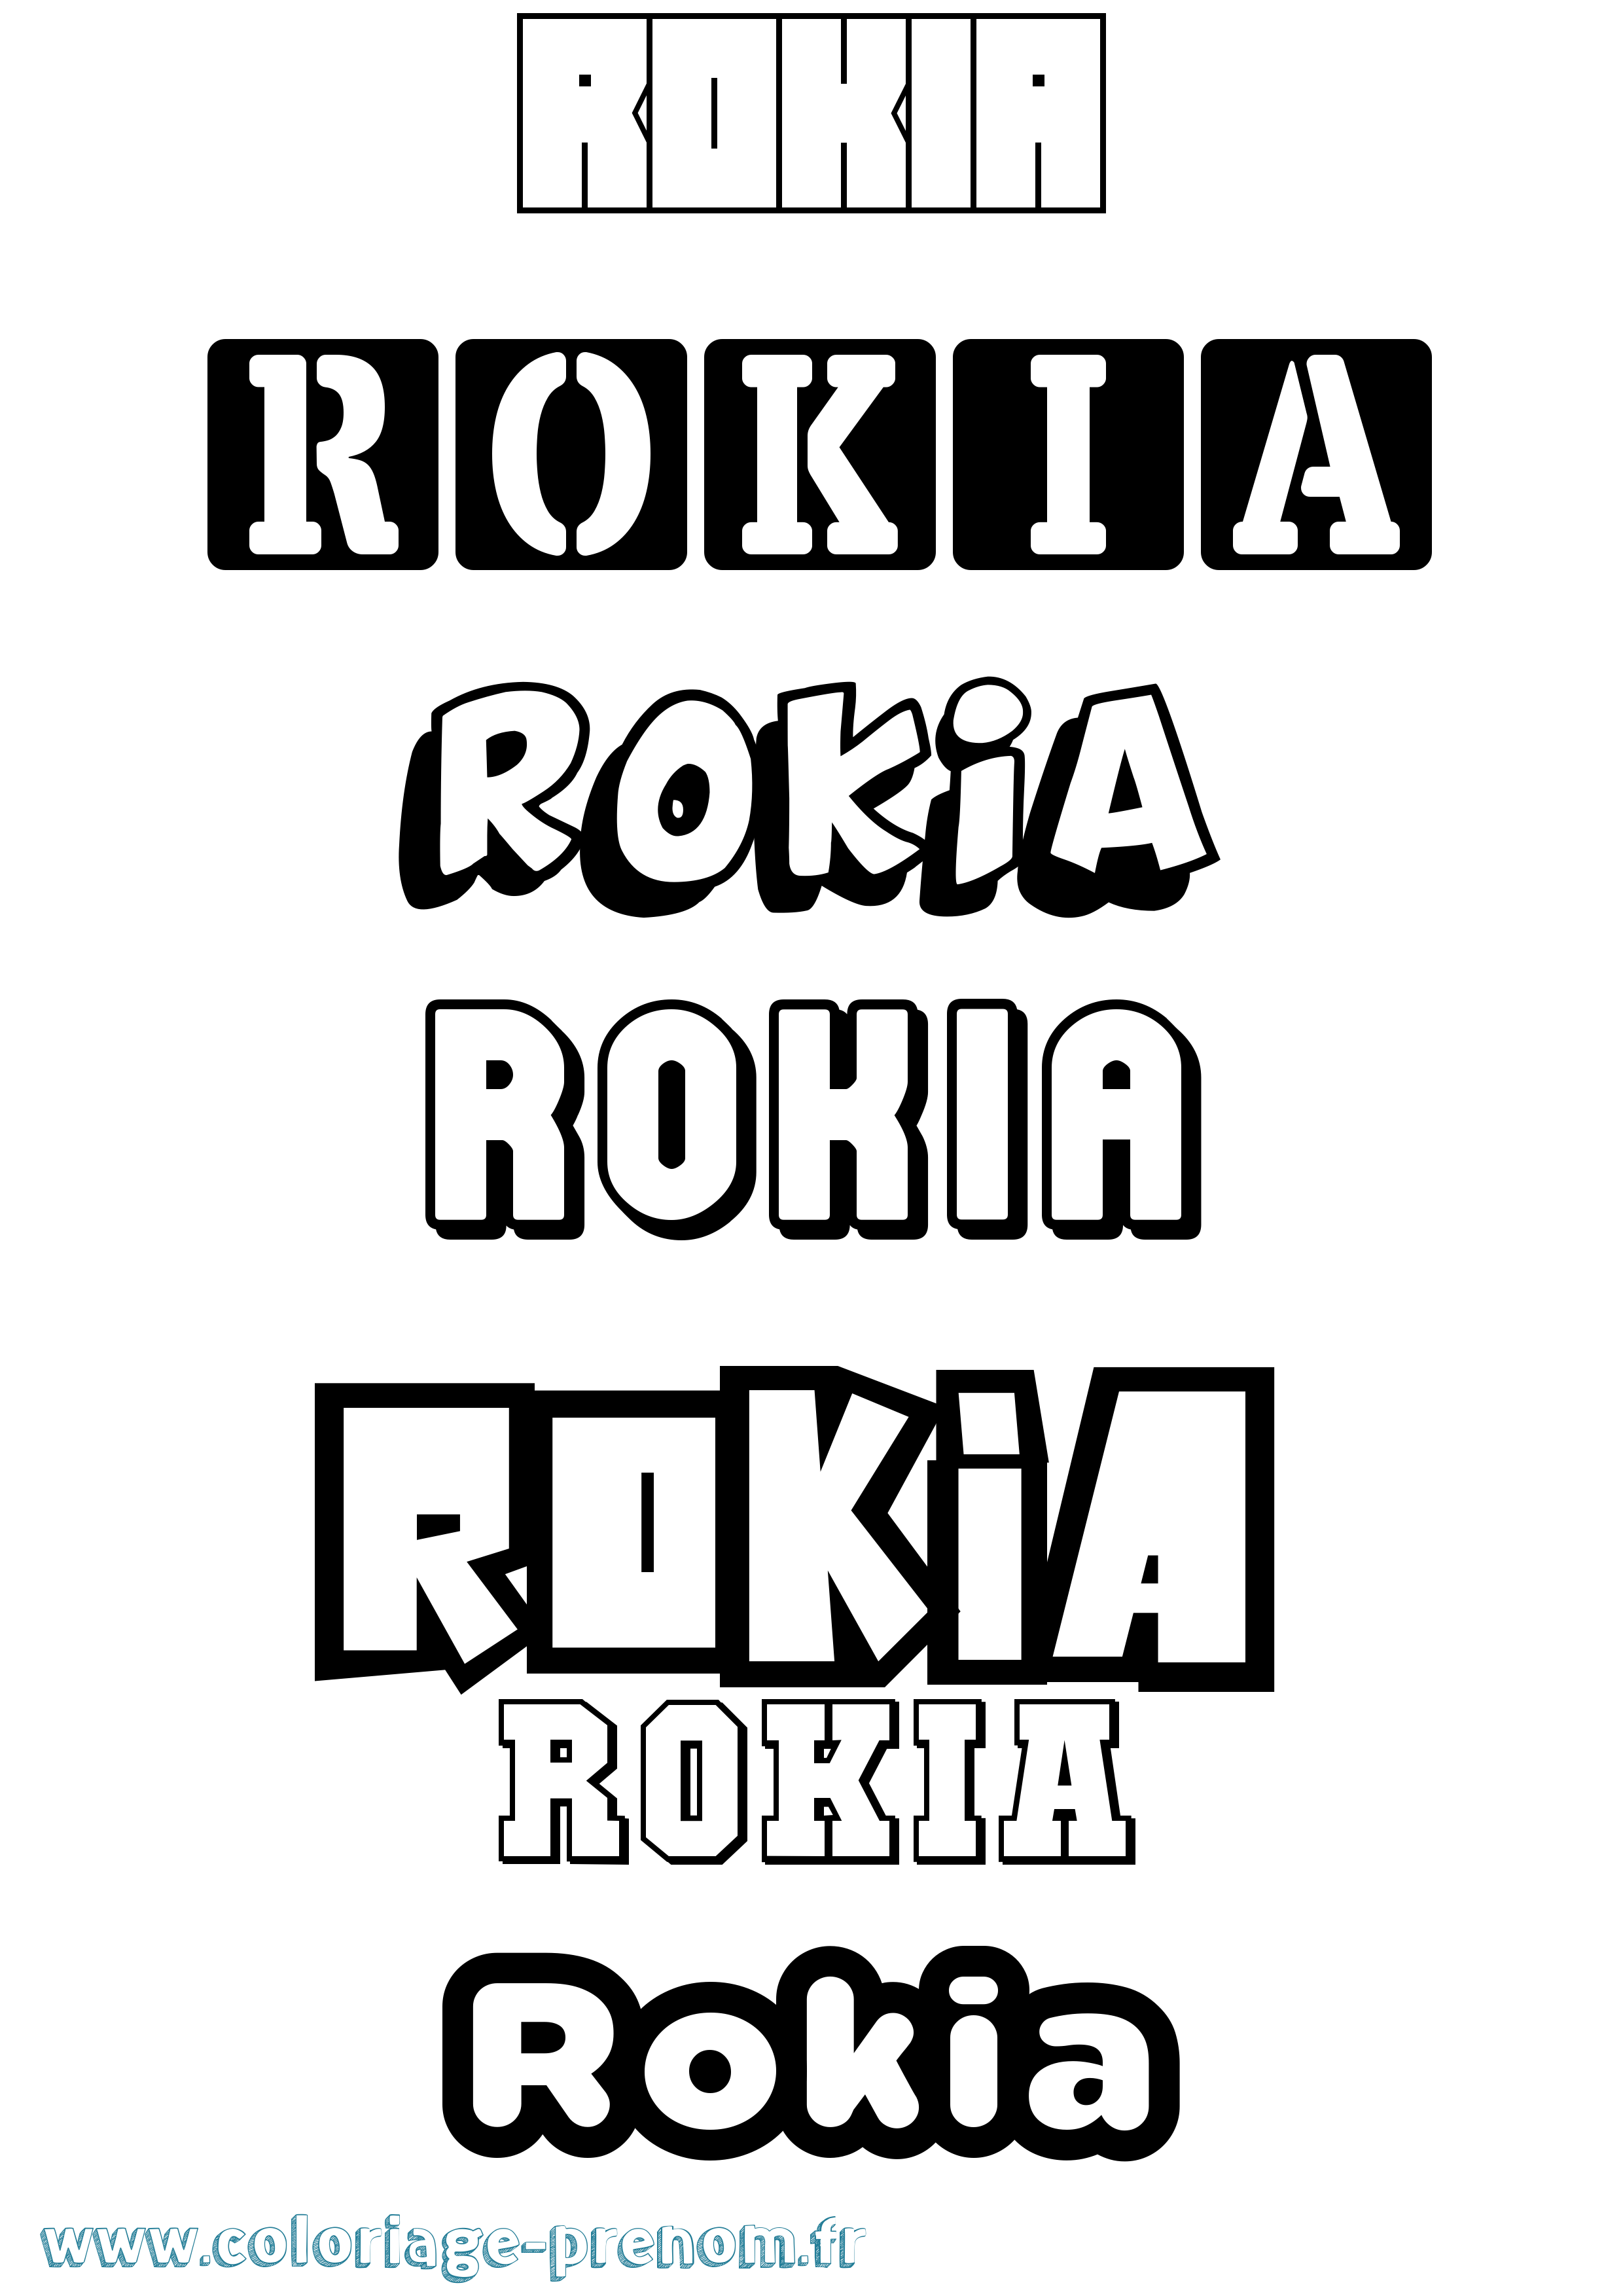 Coloriage prénom Rokia